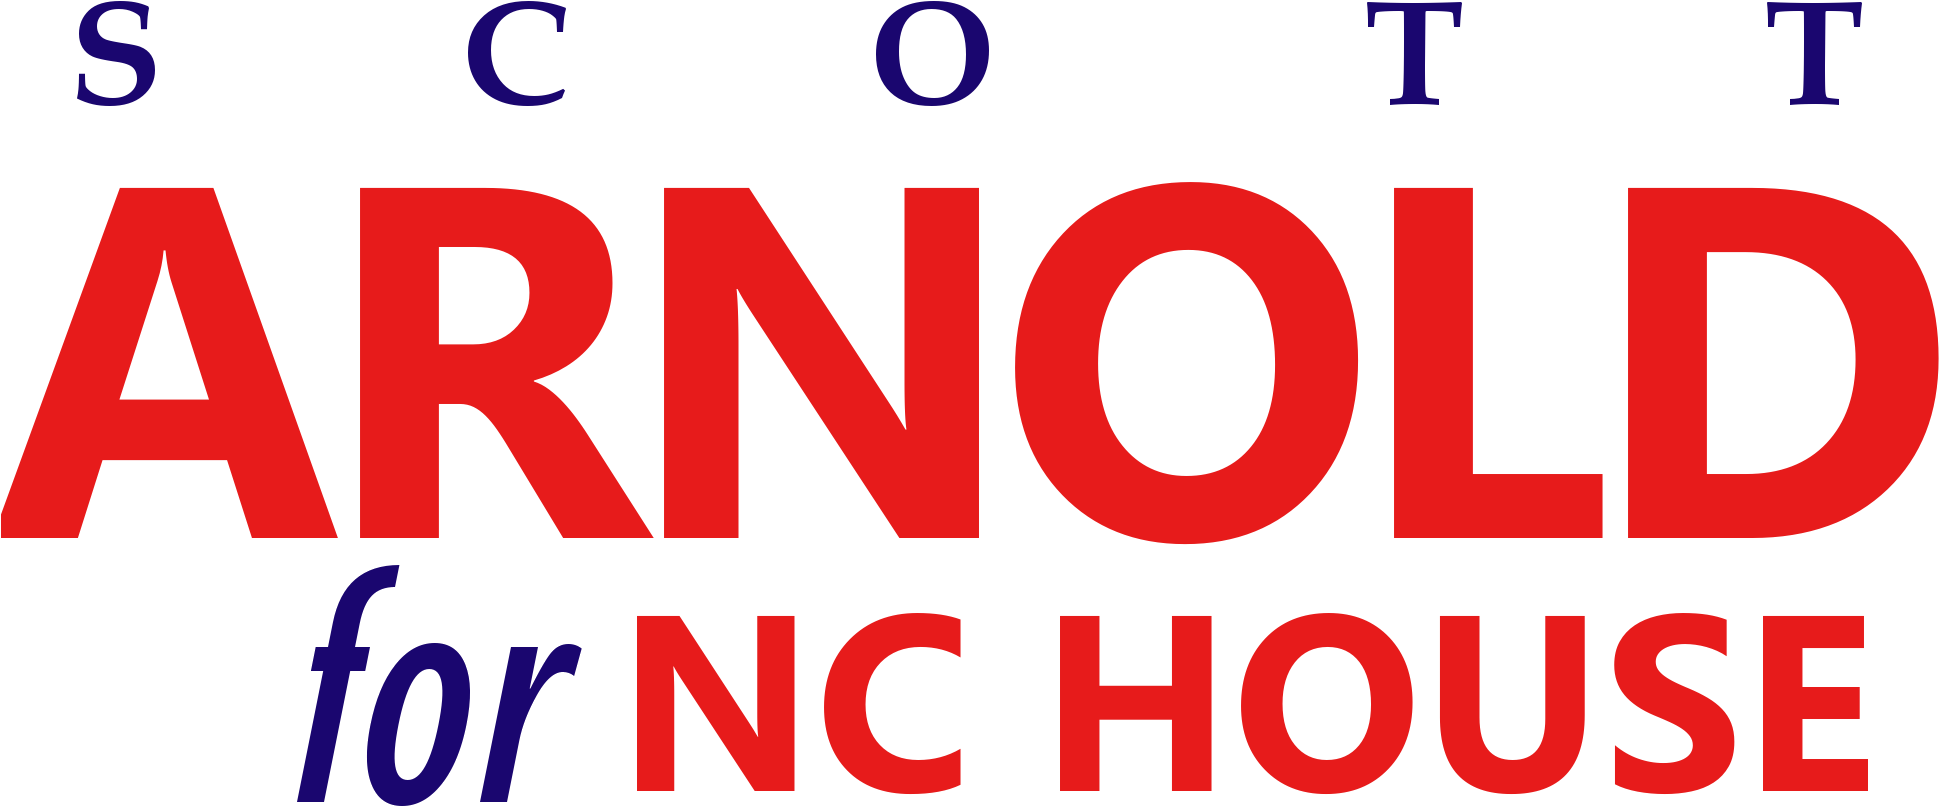 Scott Arnold For Nc House - Warner Media New Logo (1969x896), Png Download